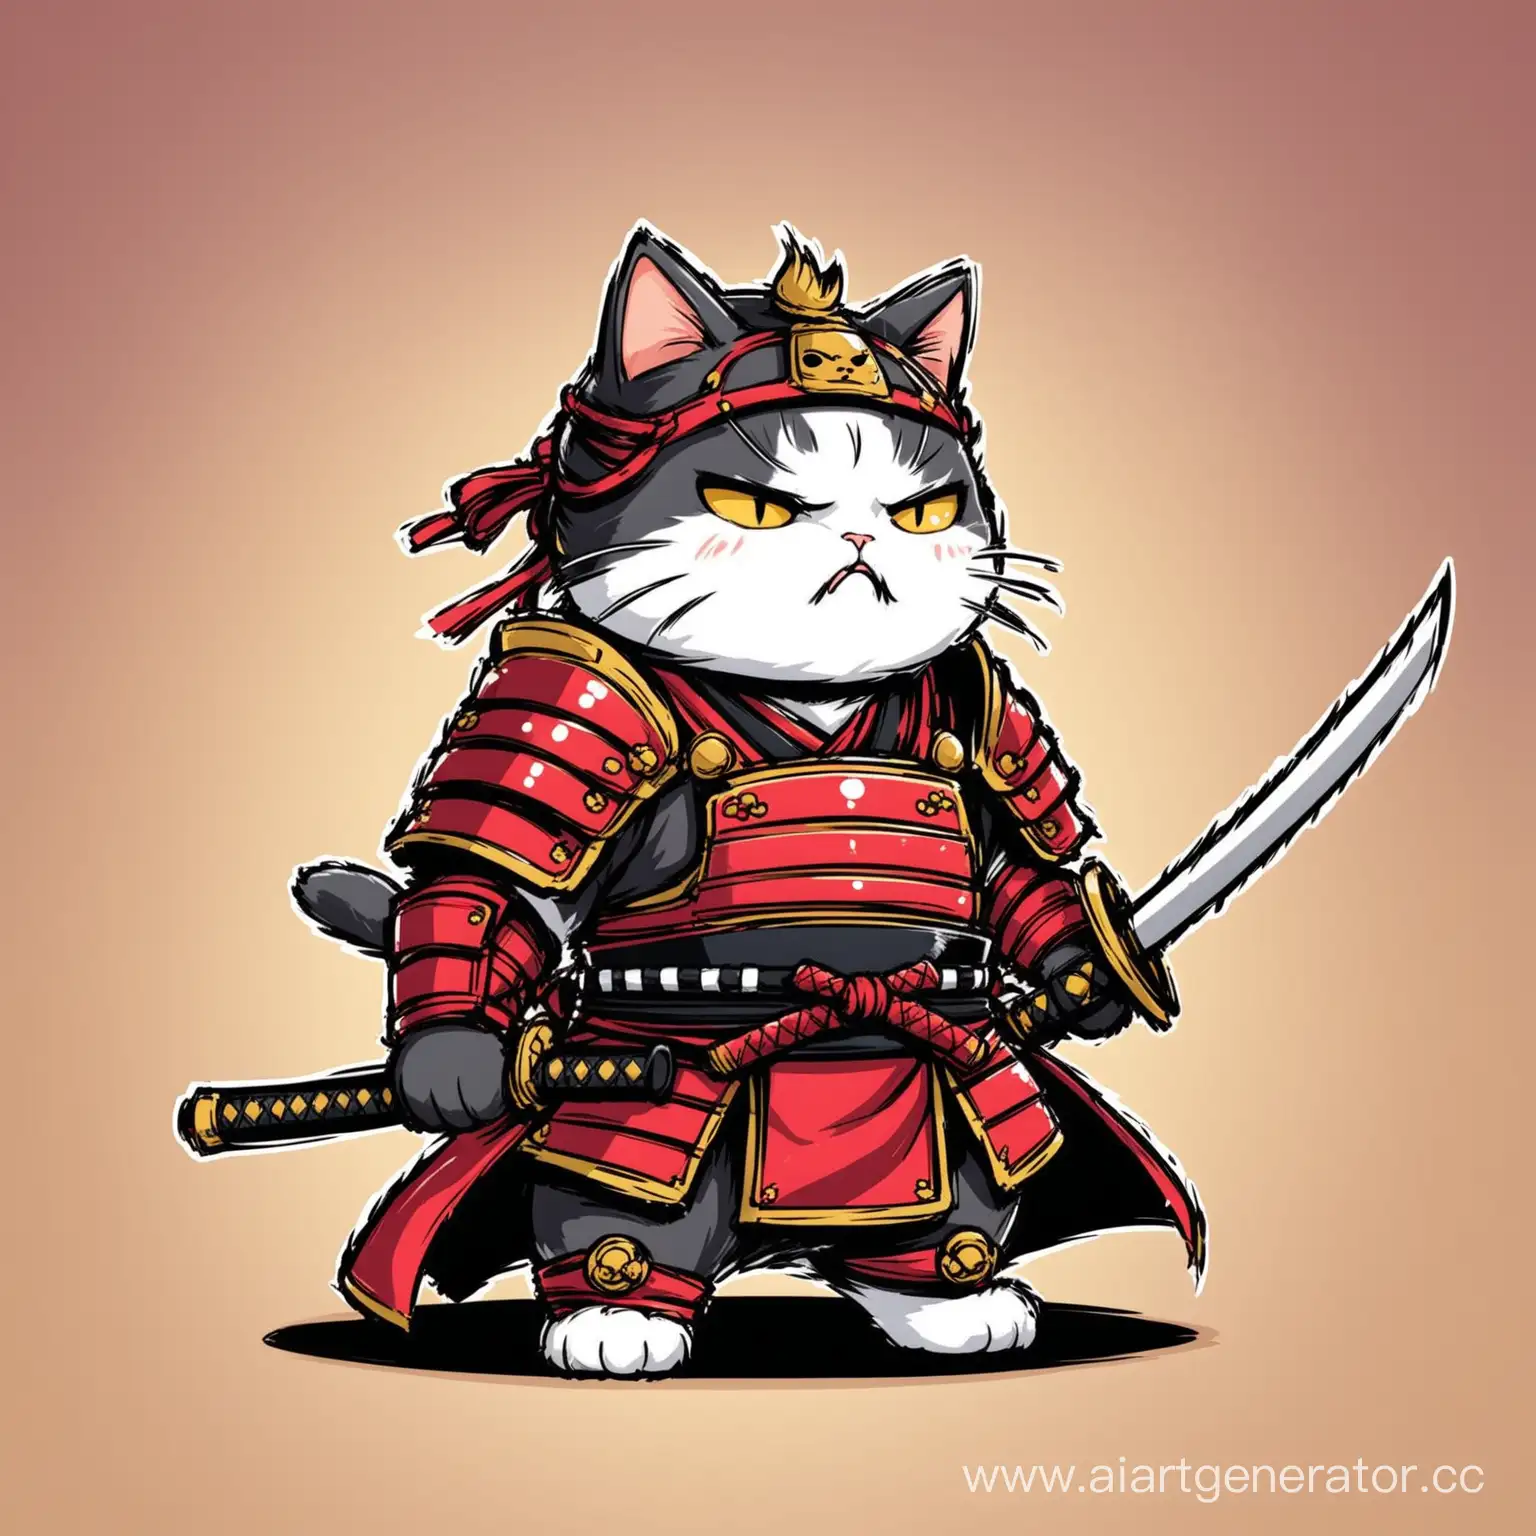 Unhappy-Cat-Samurai-Warrior-in-Moody-Setting